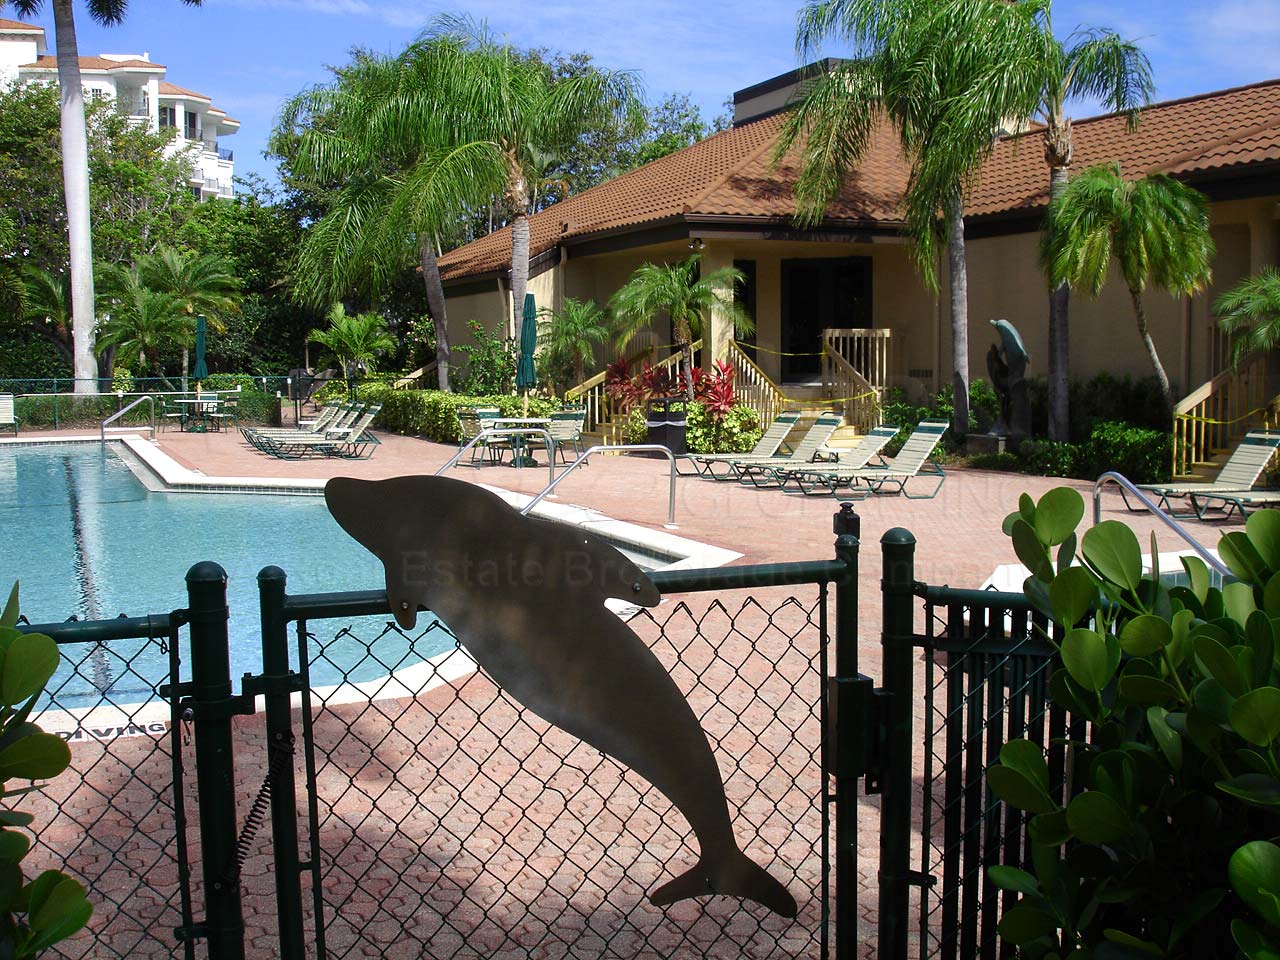 La Peninsula La Peninsula Shared Community Pool with Twin Dolphins